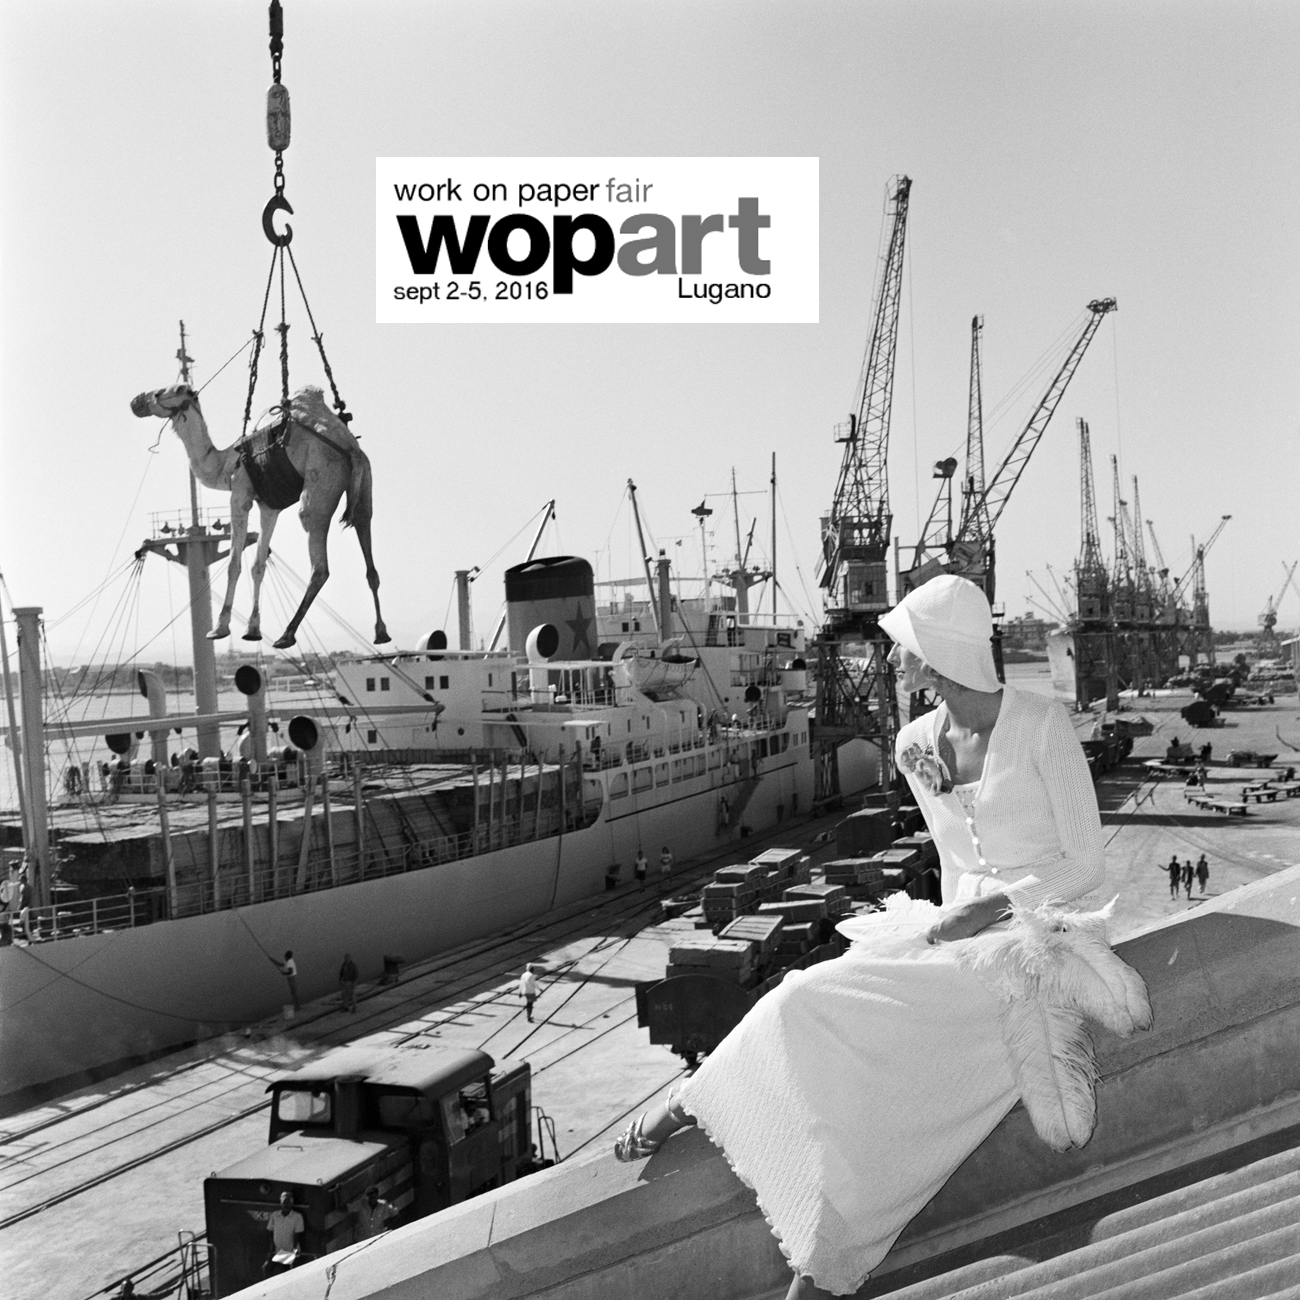 Jill Kellington, Vogue France, Port Sudan for Missoni 1974 - 3/15 - 90x90 cm - Special Edition for WopArt fair 2016